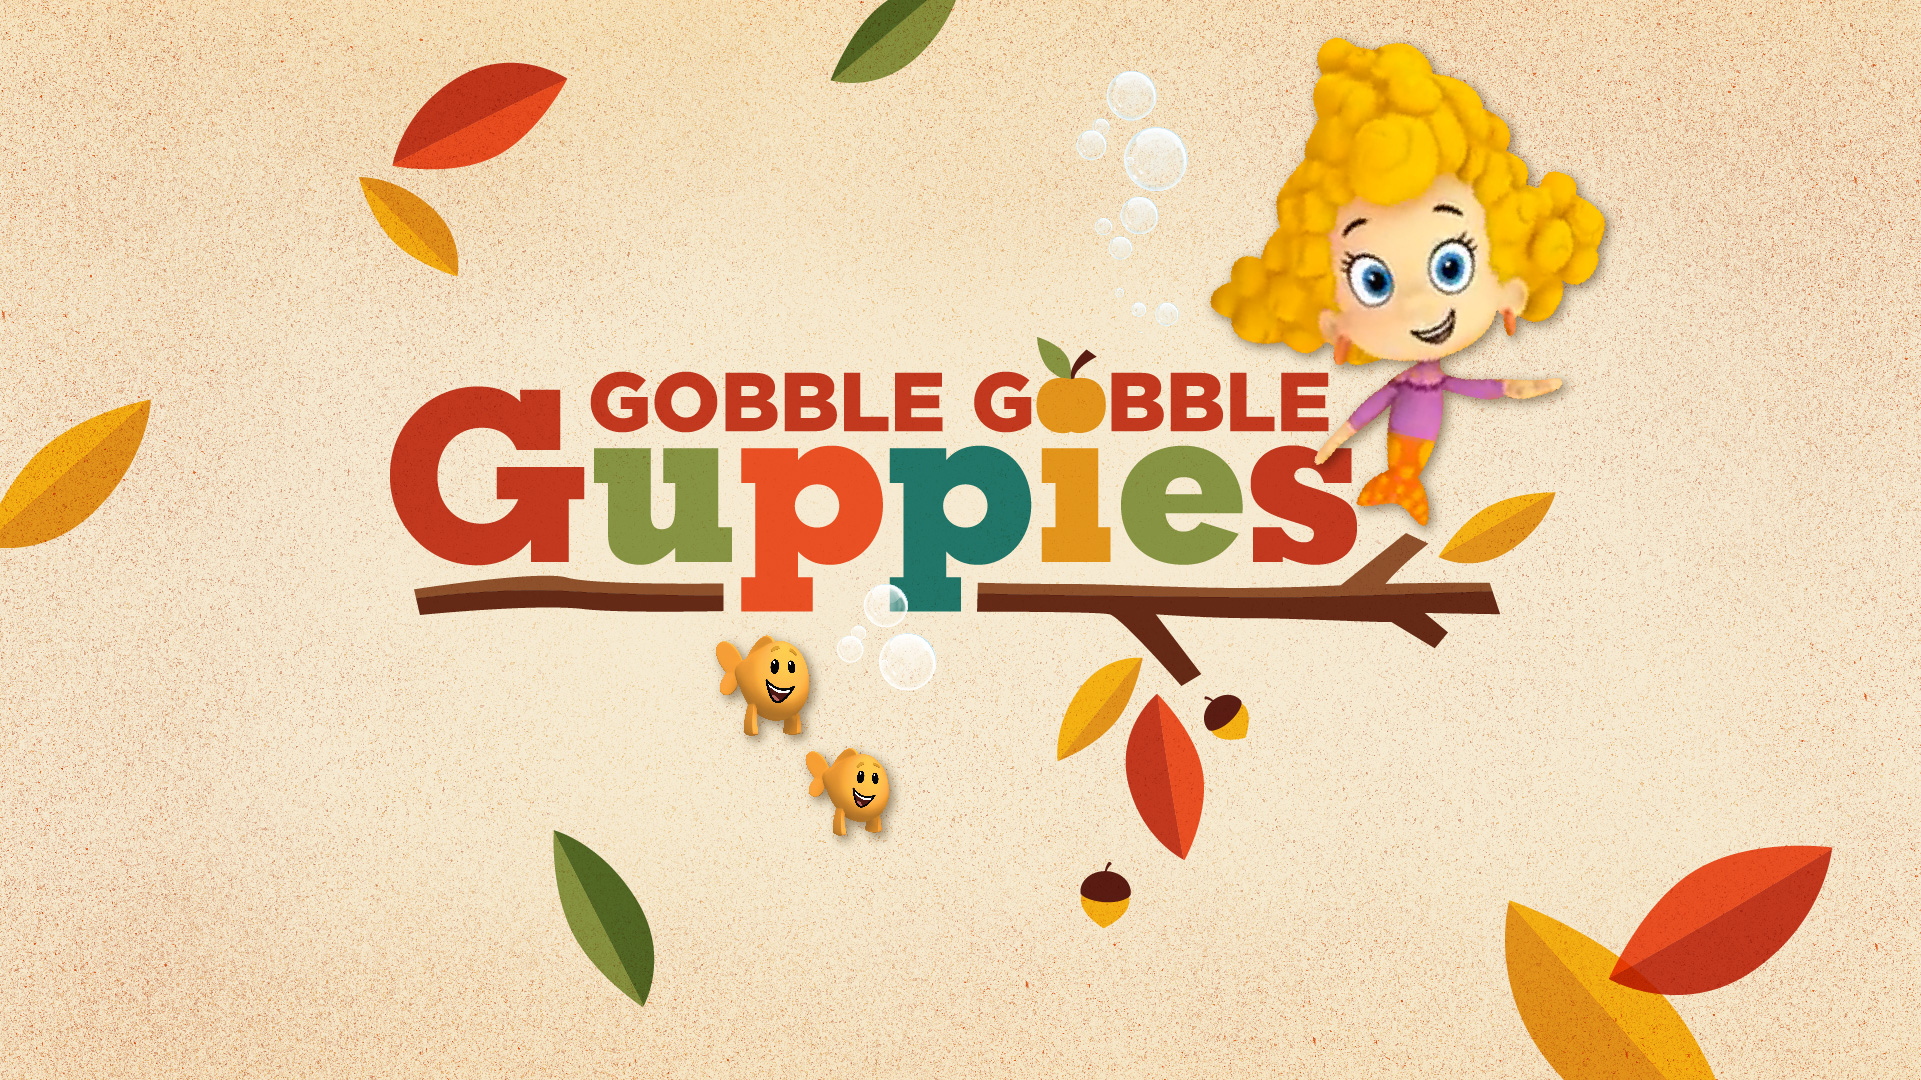 Gobble Gobble Guppies_Title-01.jpg